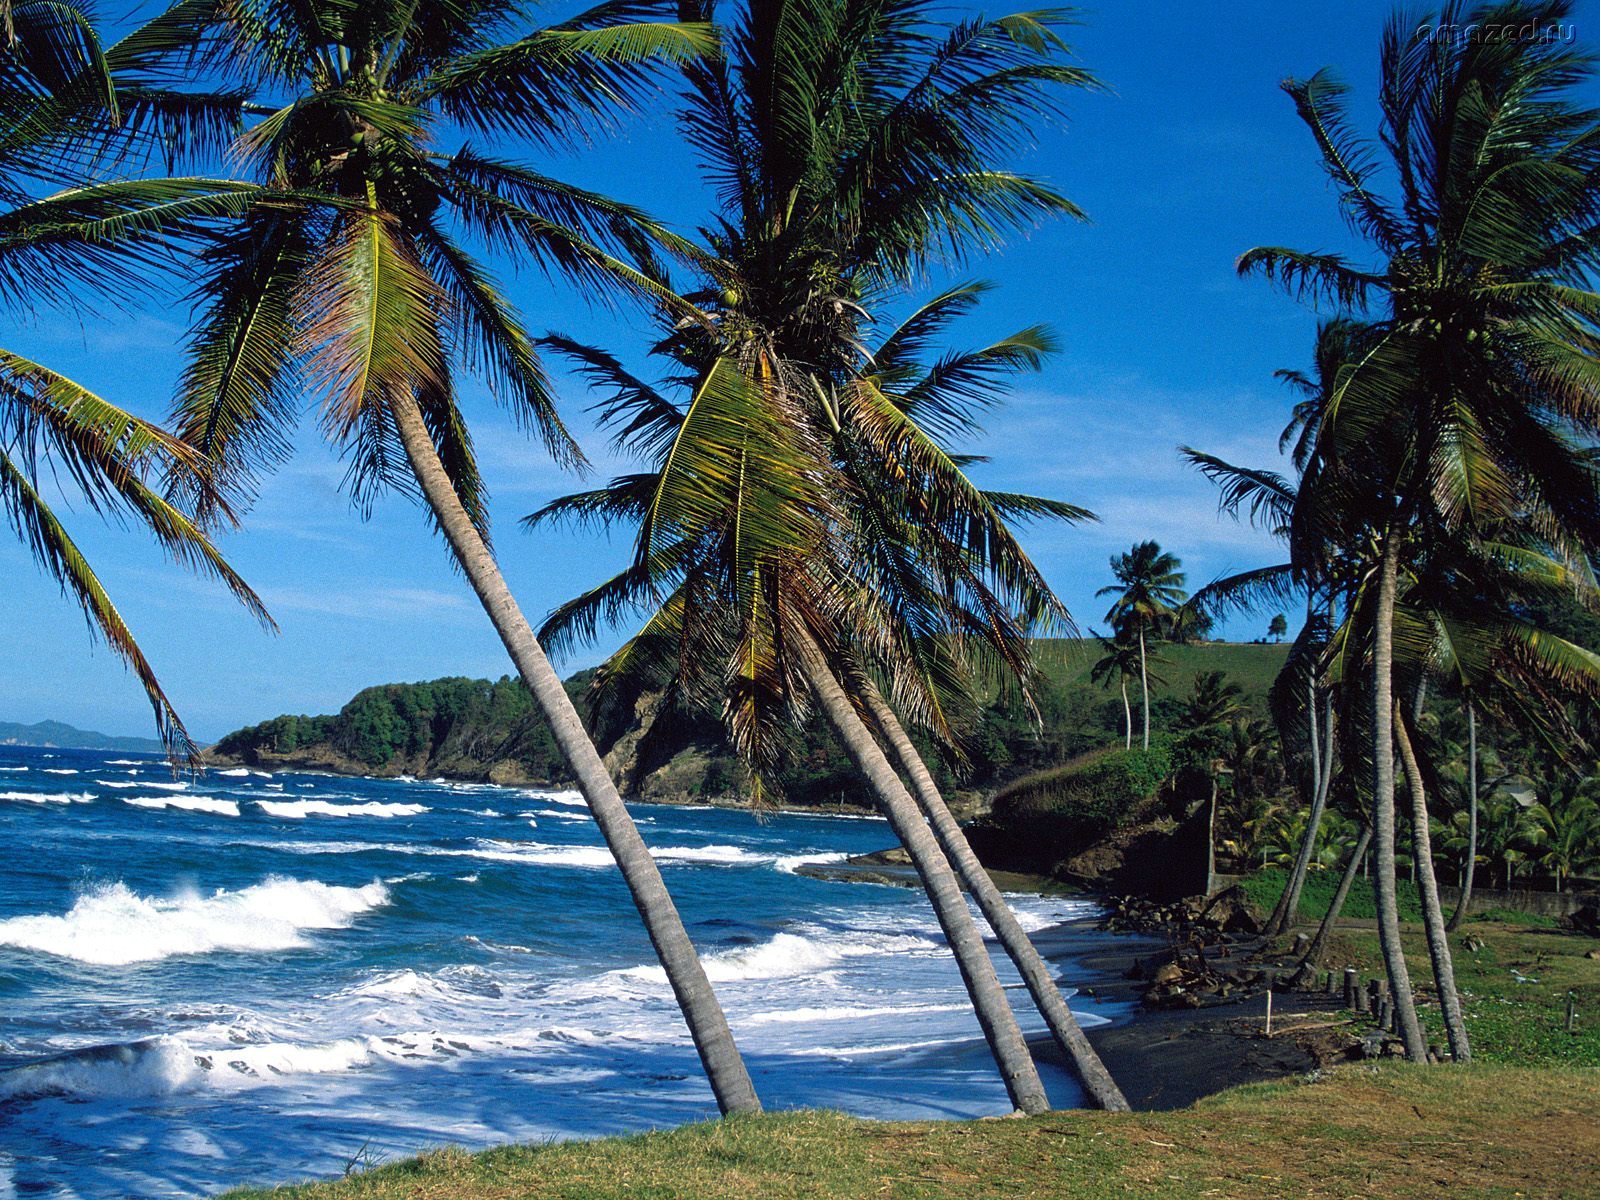 15555 descargar imagen palms, paisaje, agua, árboles, mar, azul: fondos de pantalla y protectores de pantalla gratis